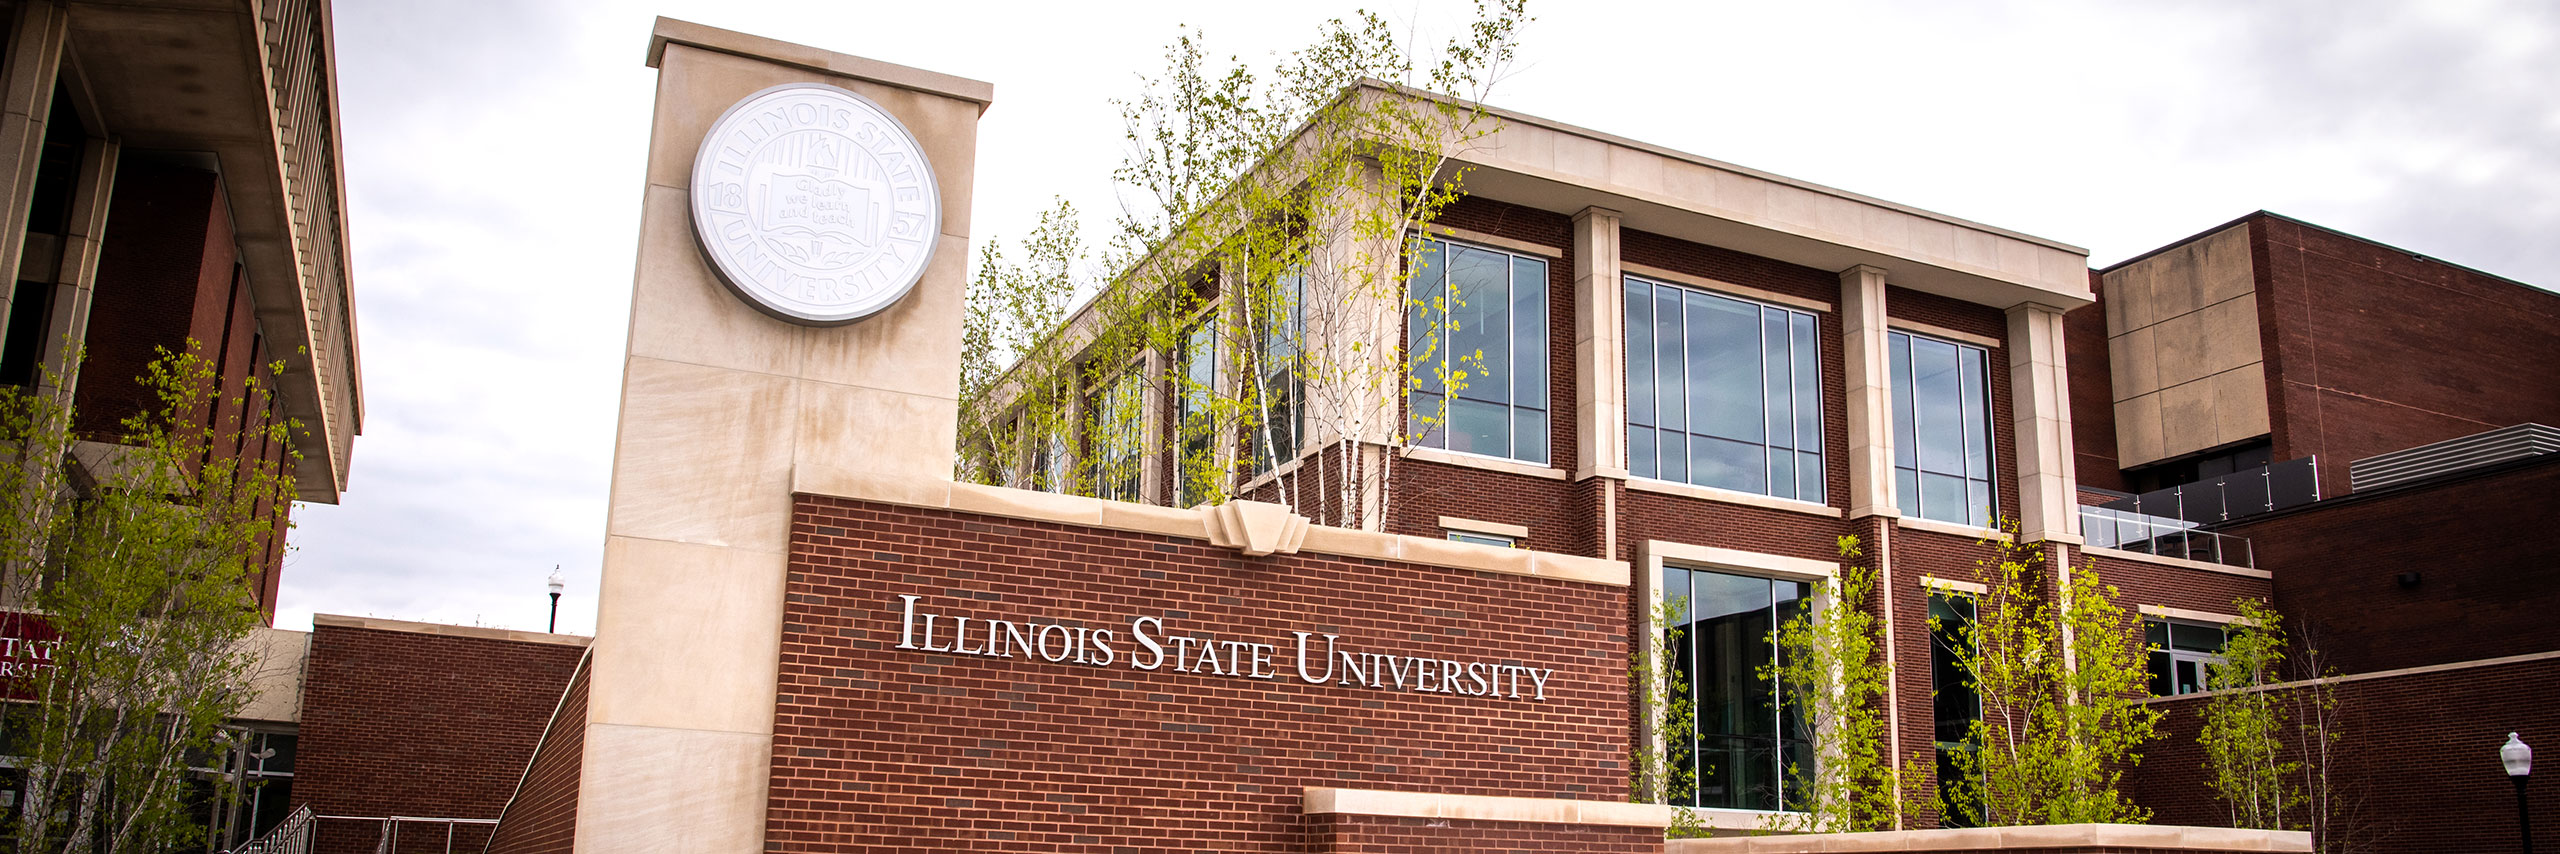 Illinois State University Sign outside Bone Student Center